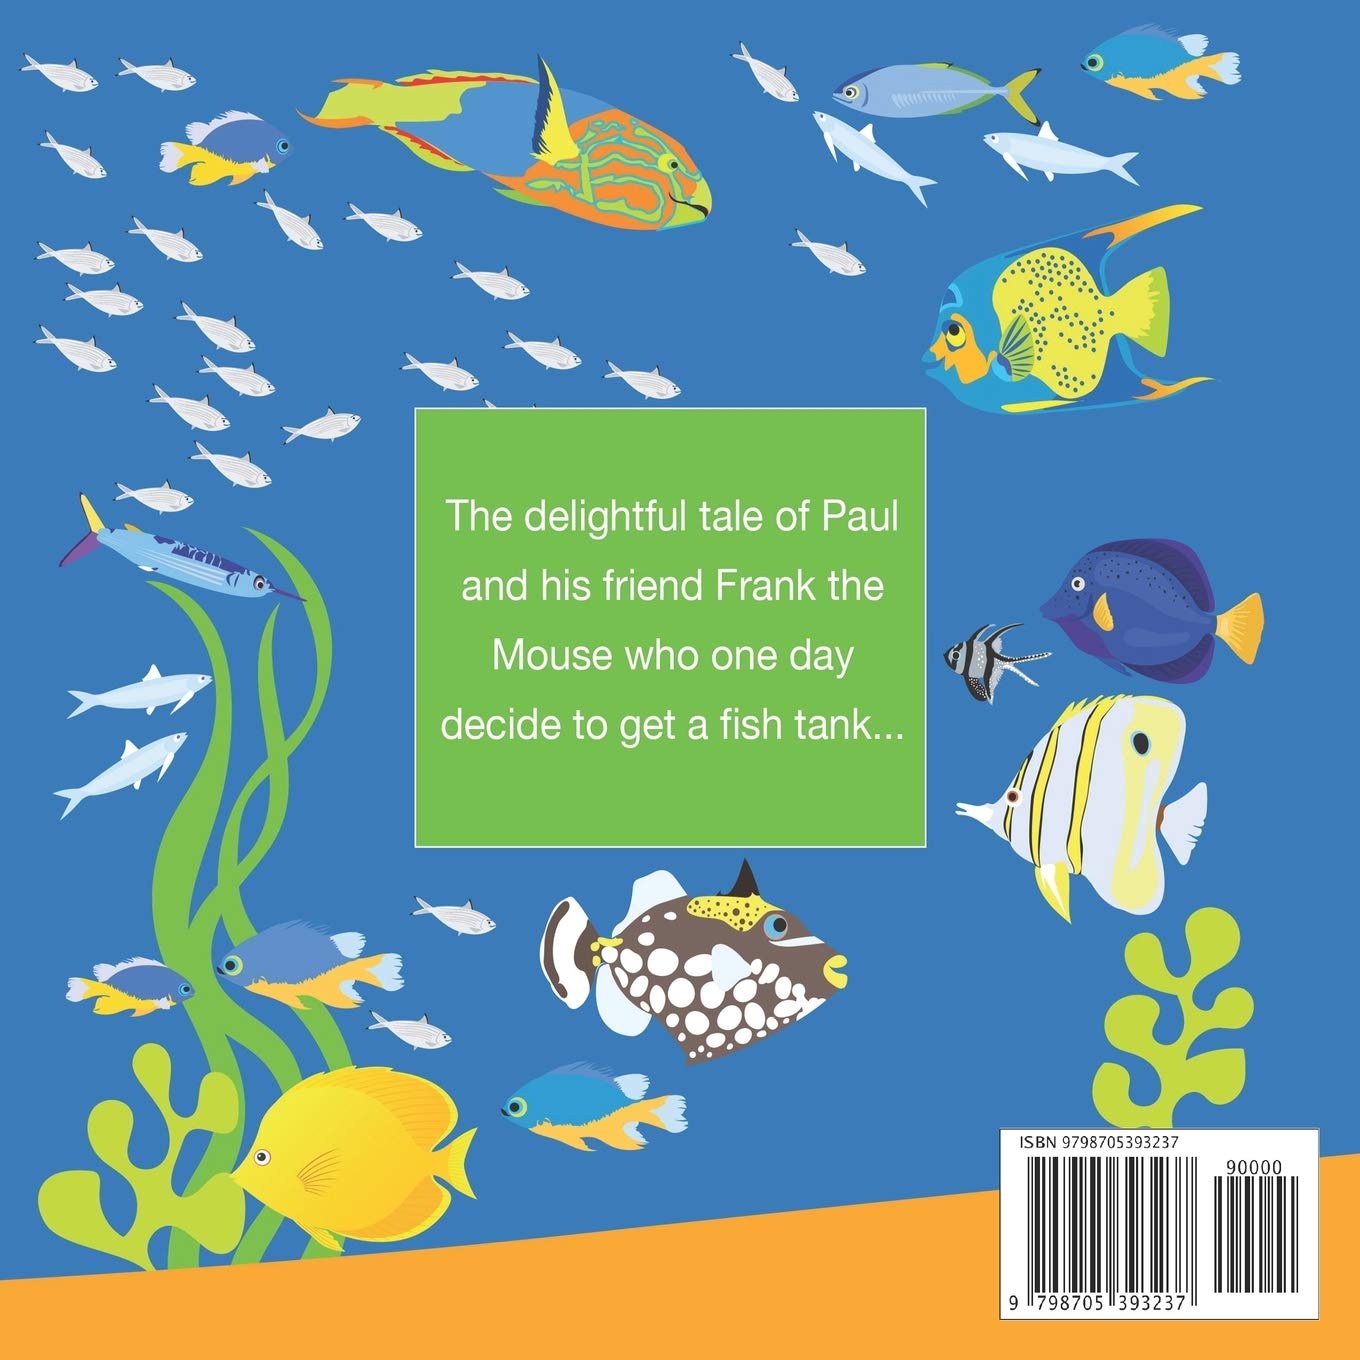 Paul & Frank Build A Sea Zoo Book Cover Illustration